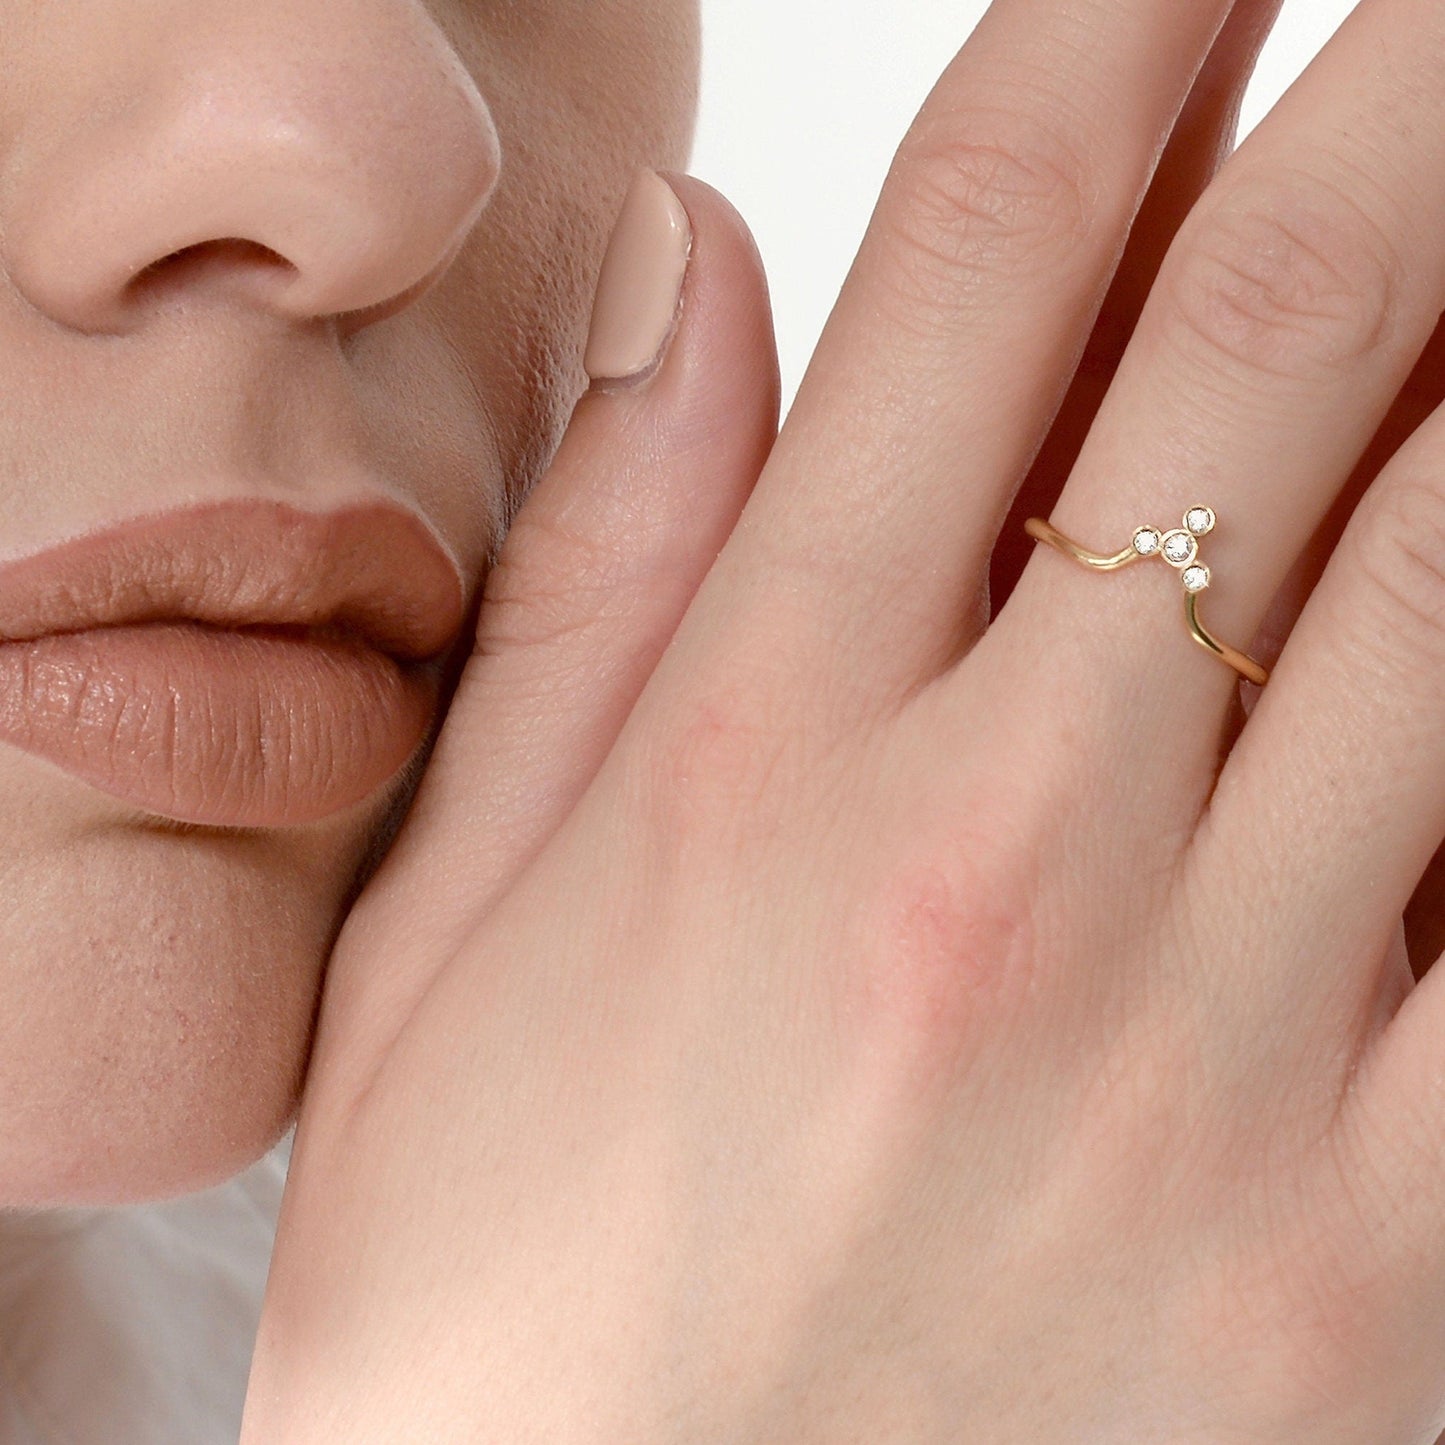 4 Diamond Dainty Ring / Minimalist Wedding Ring / 14K Solid Gold Diamond Ring / 14k Gold Stackable Ring / Christmas Sale